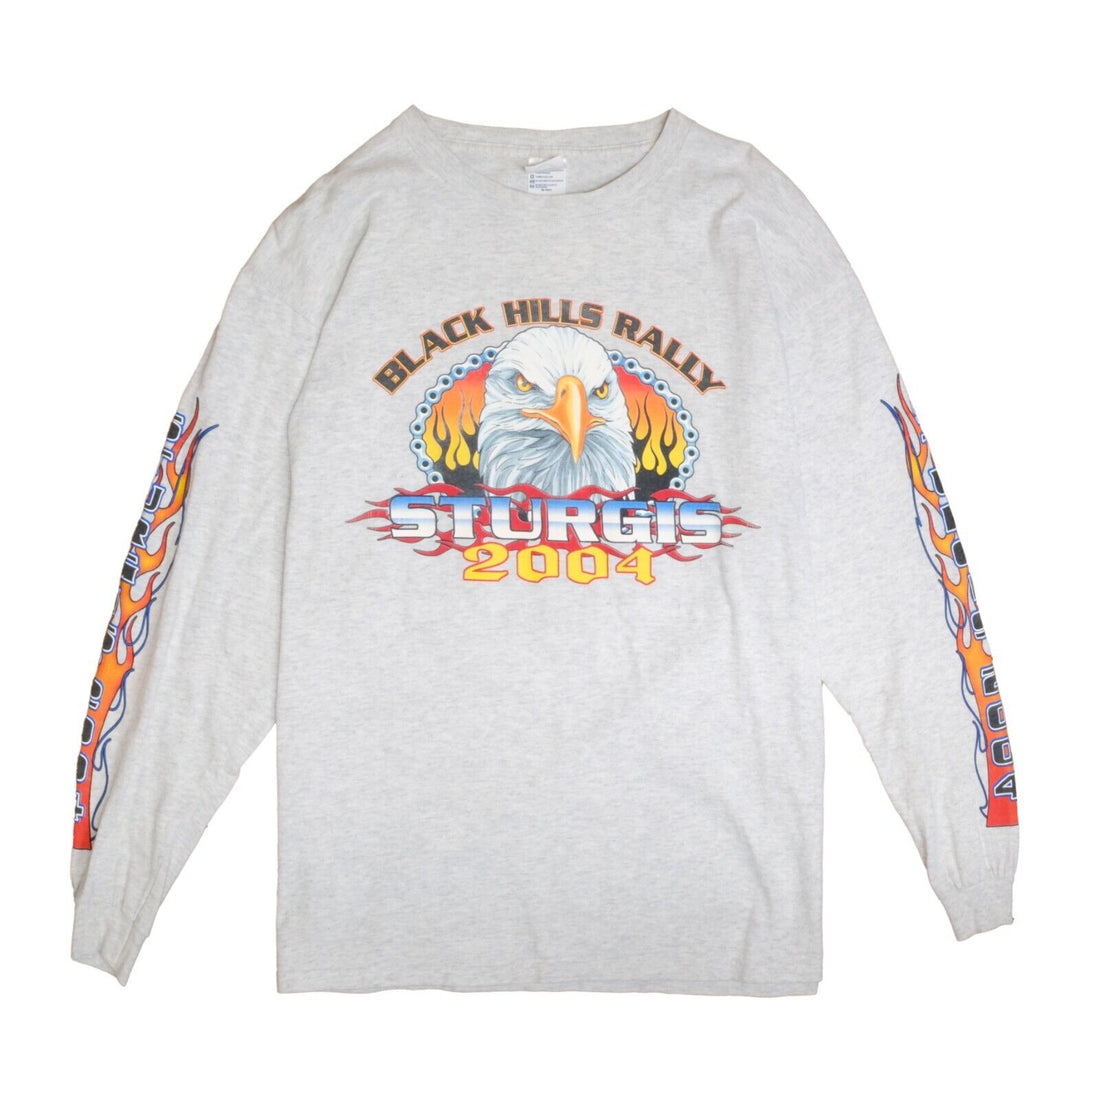 Vintage Black Hills Rally Sturgis Long Sleeve T-Shirt Size XL Gray 2004